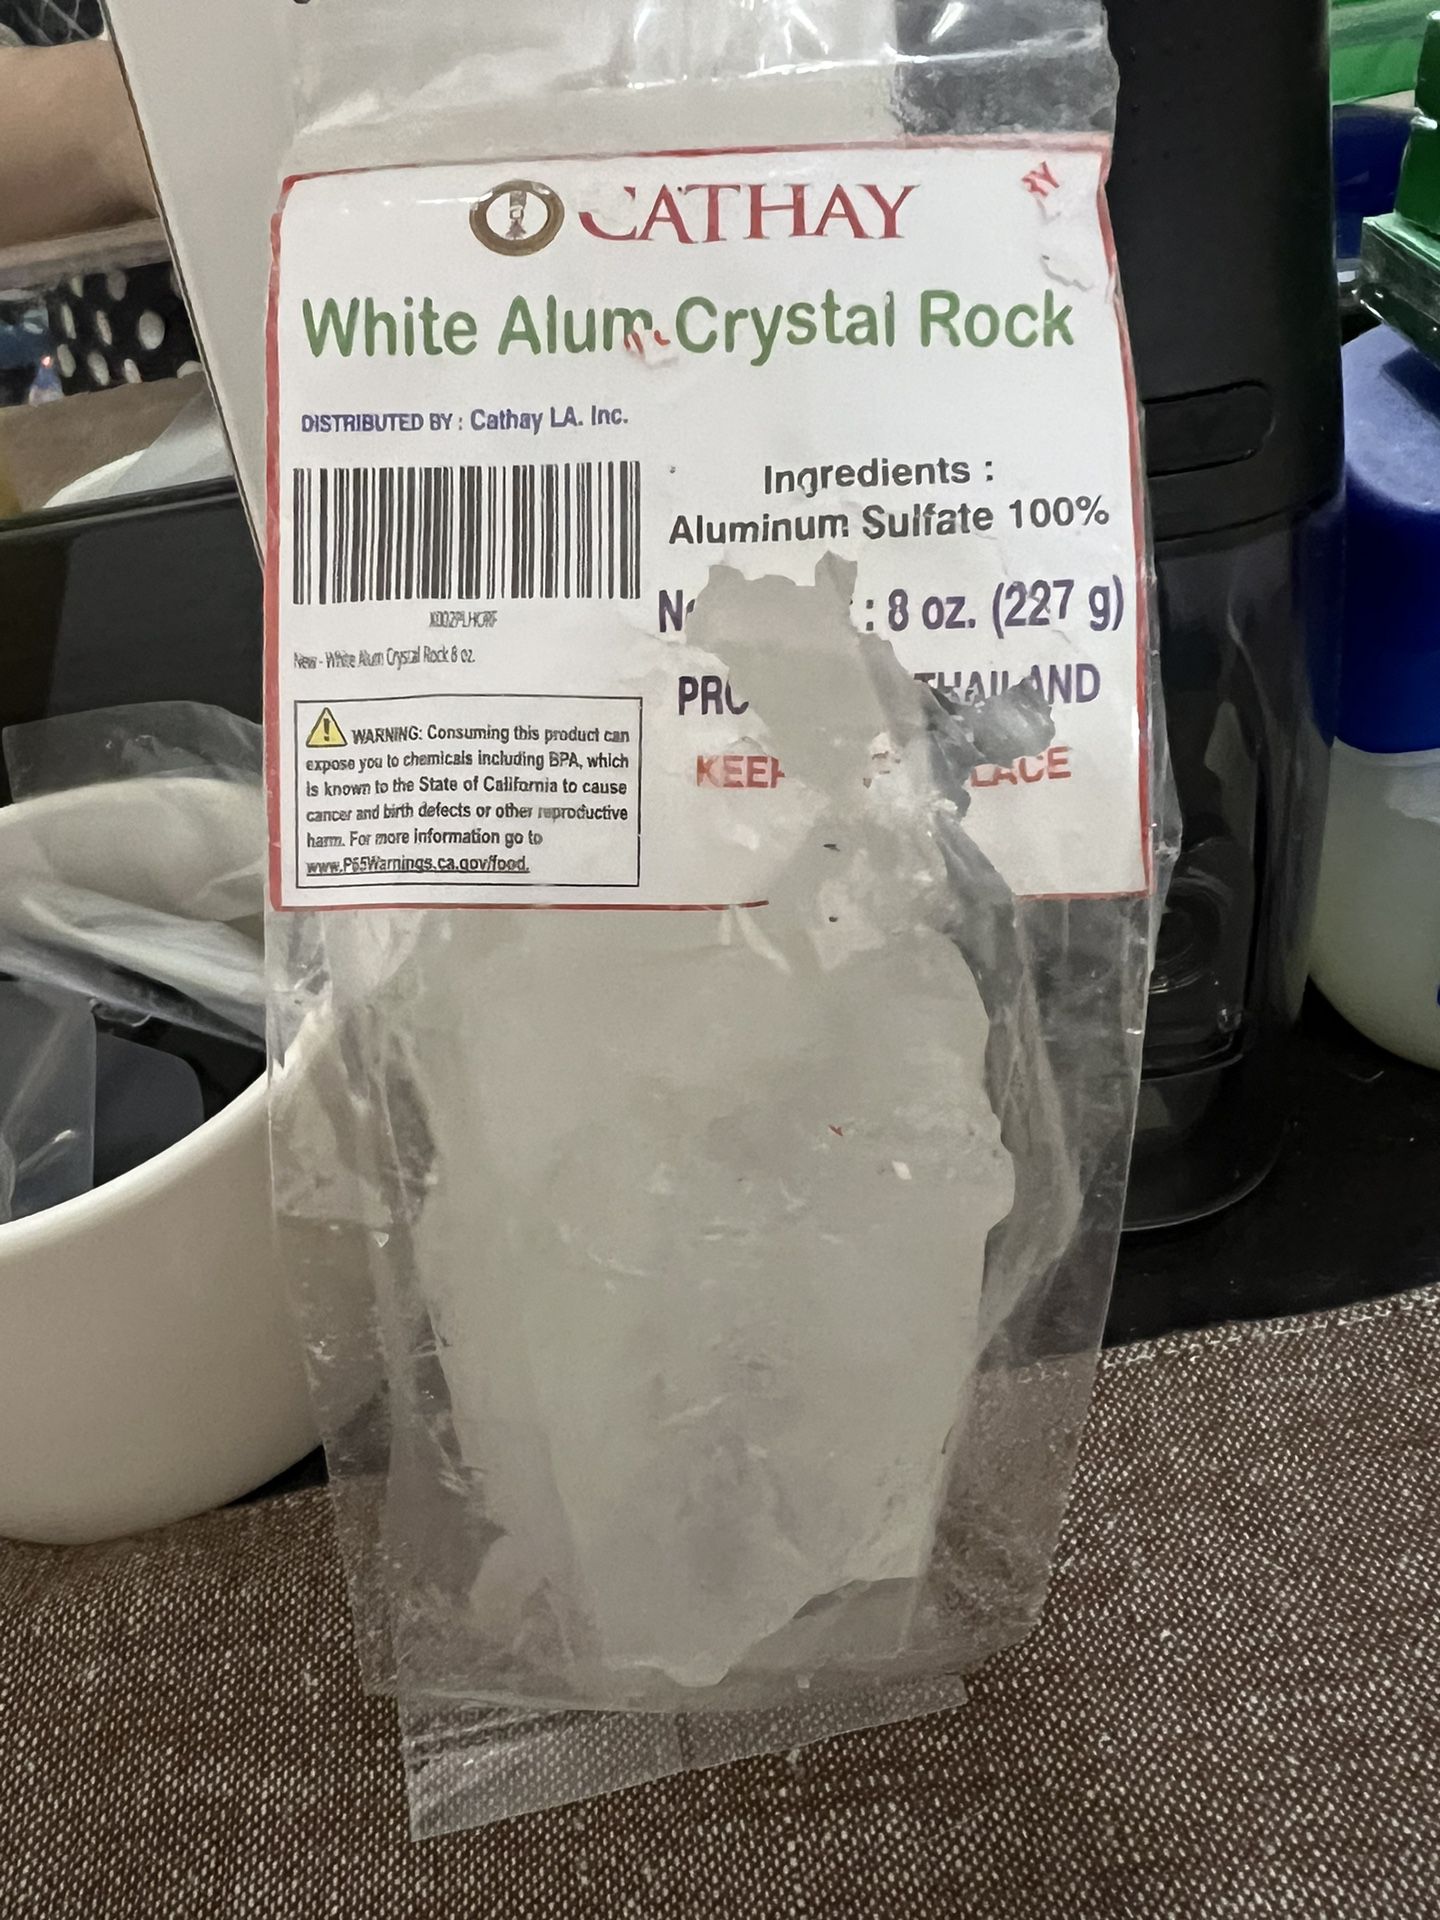 White Alum Crystal Rock